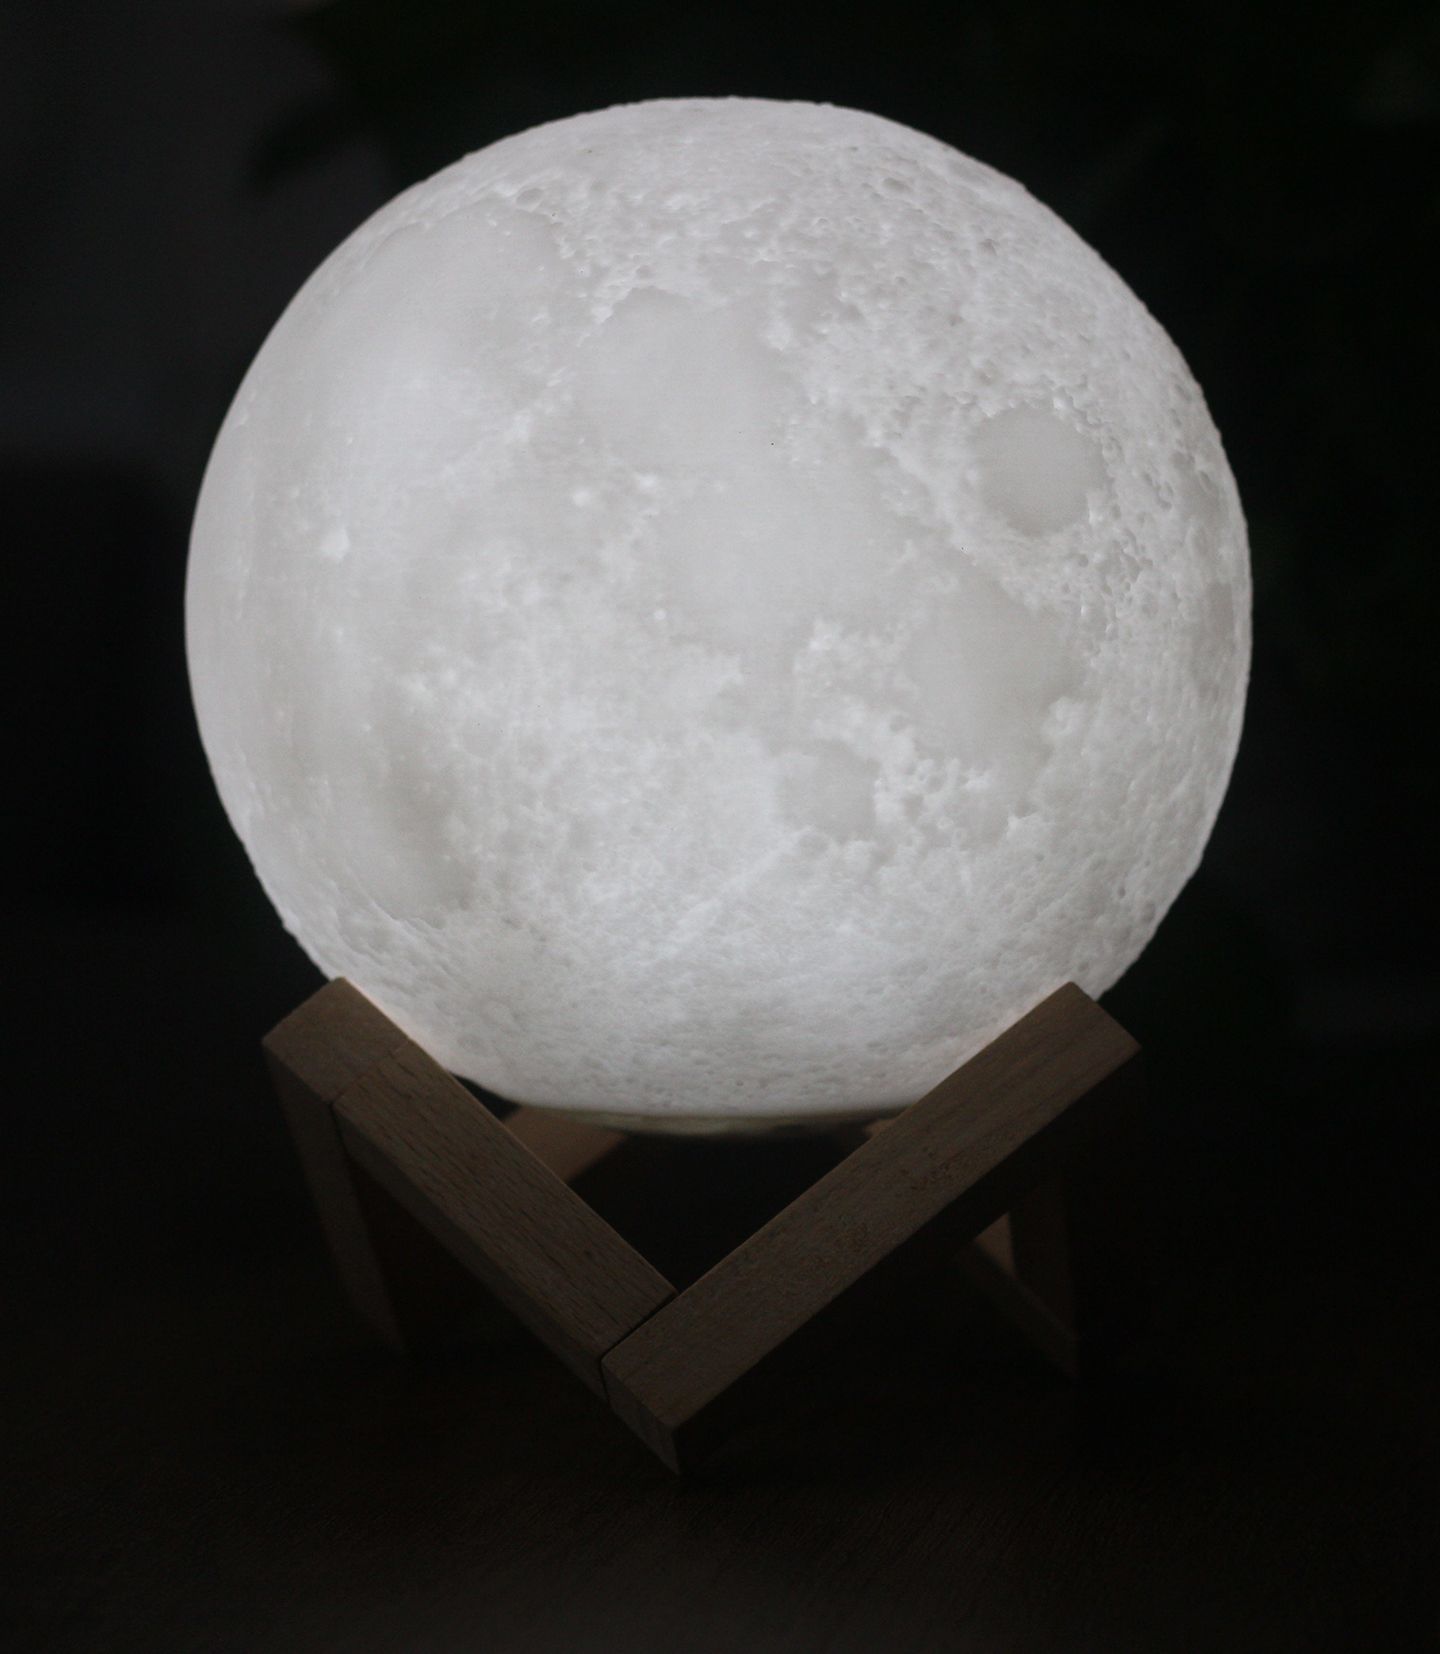 Lampe Lune 3D